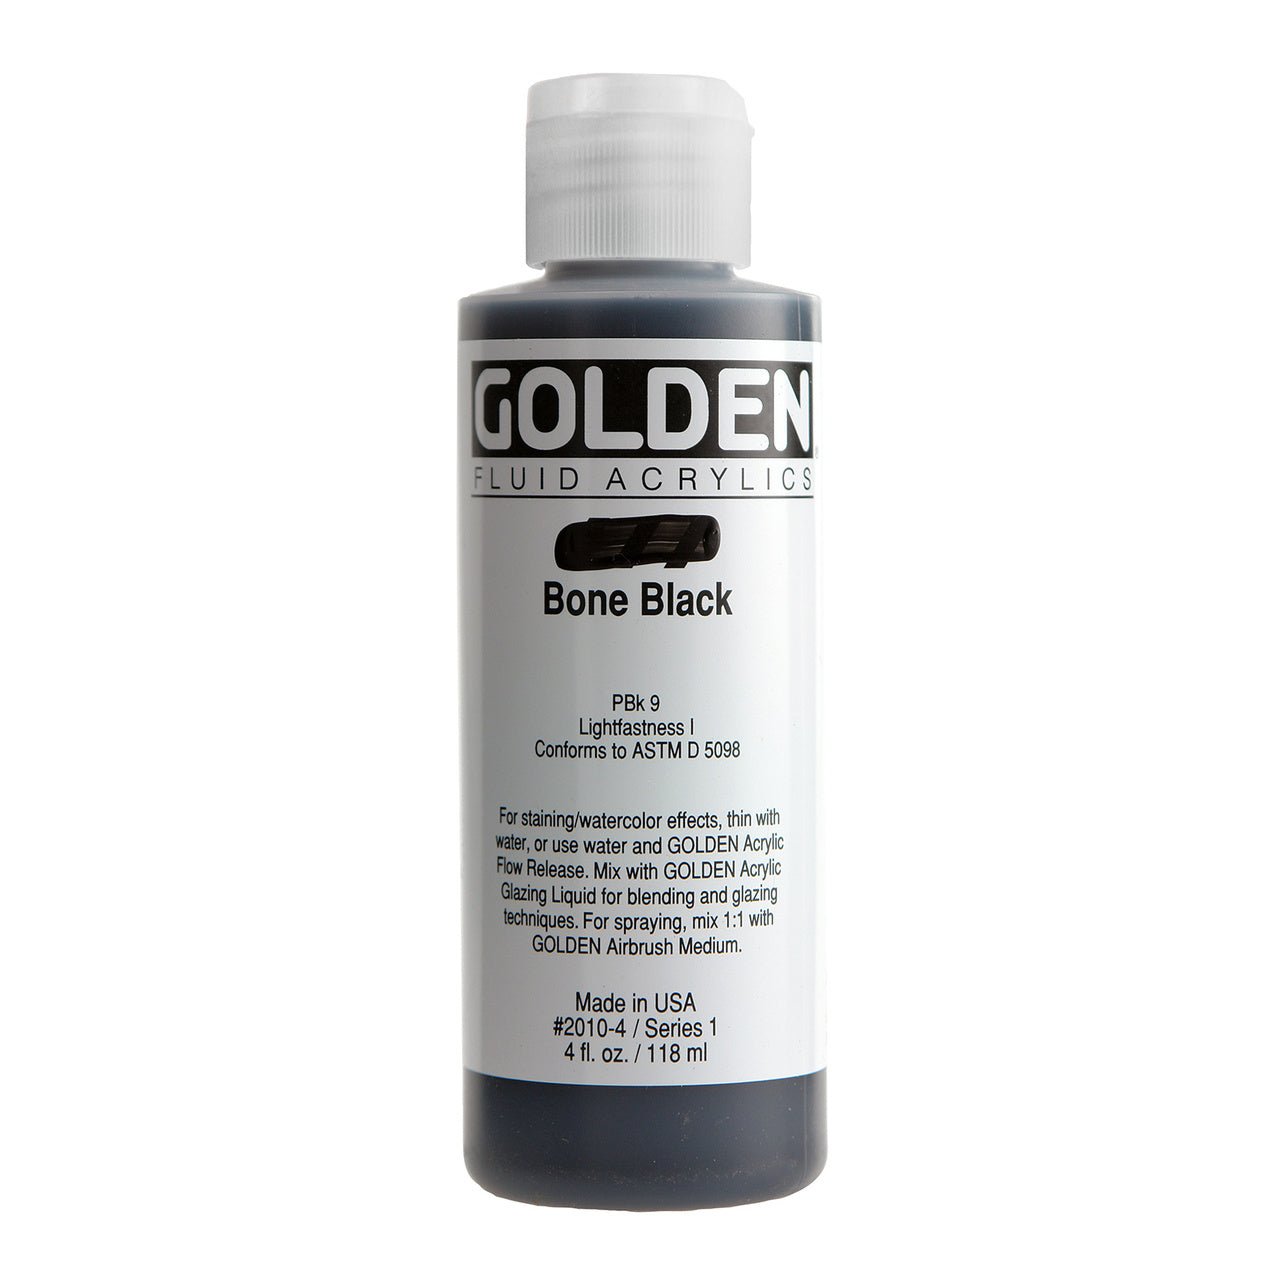 Golden Fluid Acrylic Bone Black 4 oz - merriartist.com